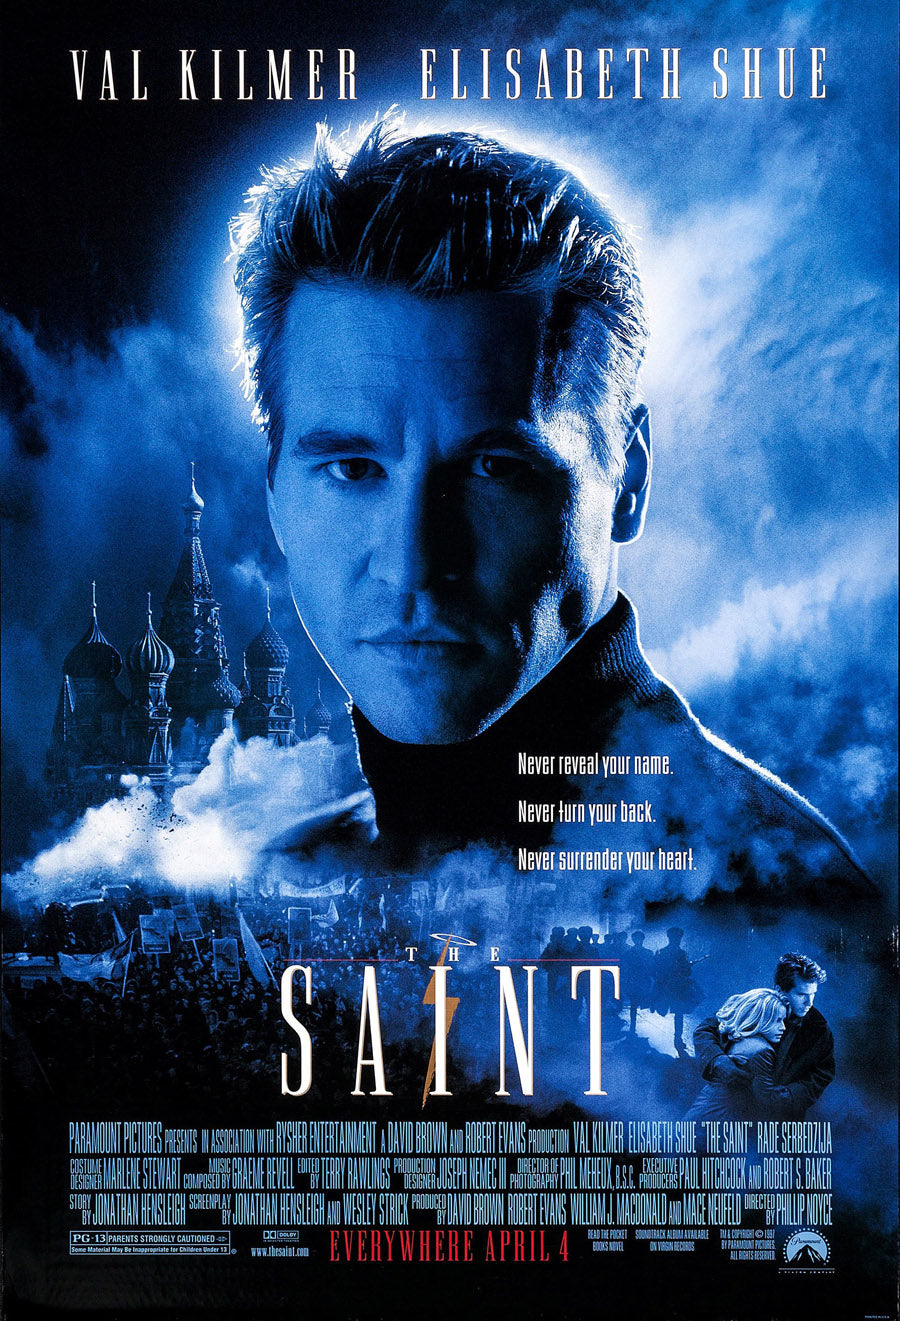 Val Kilmer - Signed The Saint Mini Movie Poster #1 (8x10, 11x17)